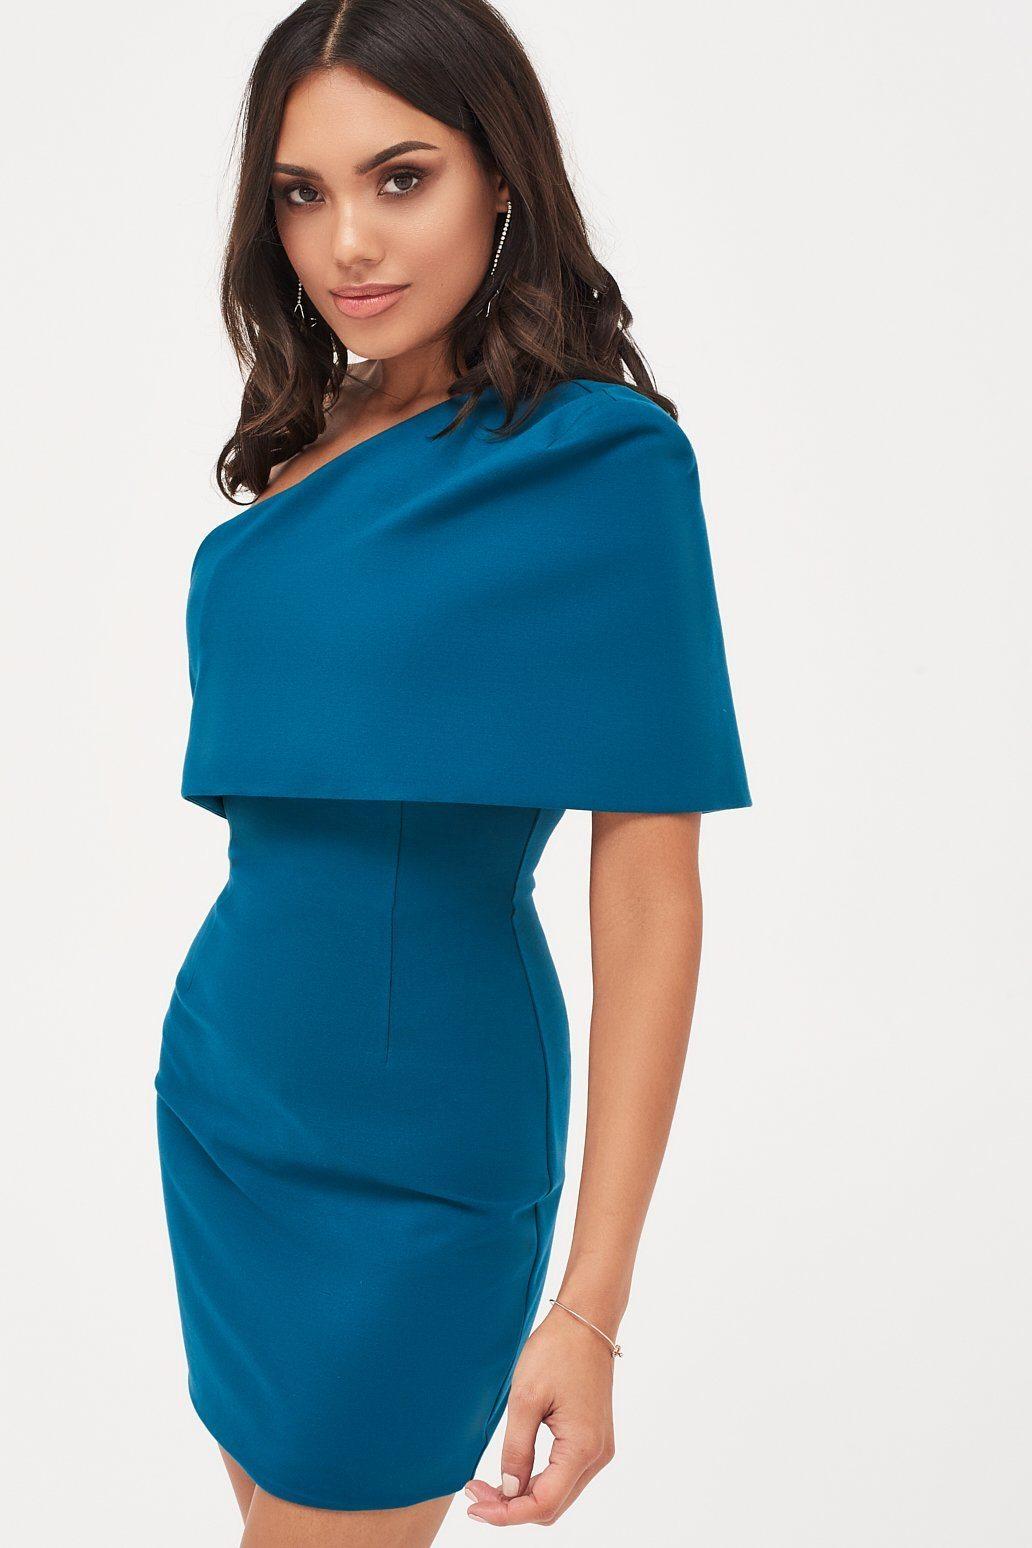 Lavish Alice Synthetic One Shoulder Cape Mini Dress in Blue - Lyst